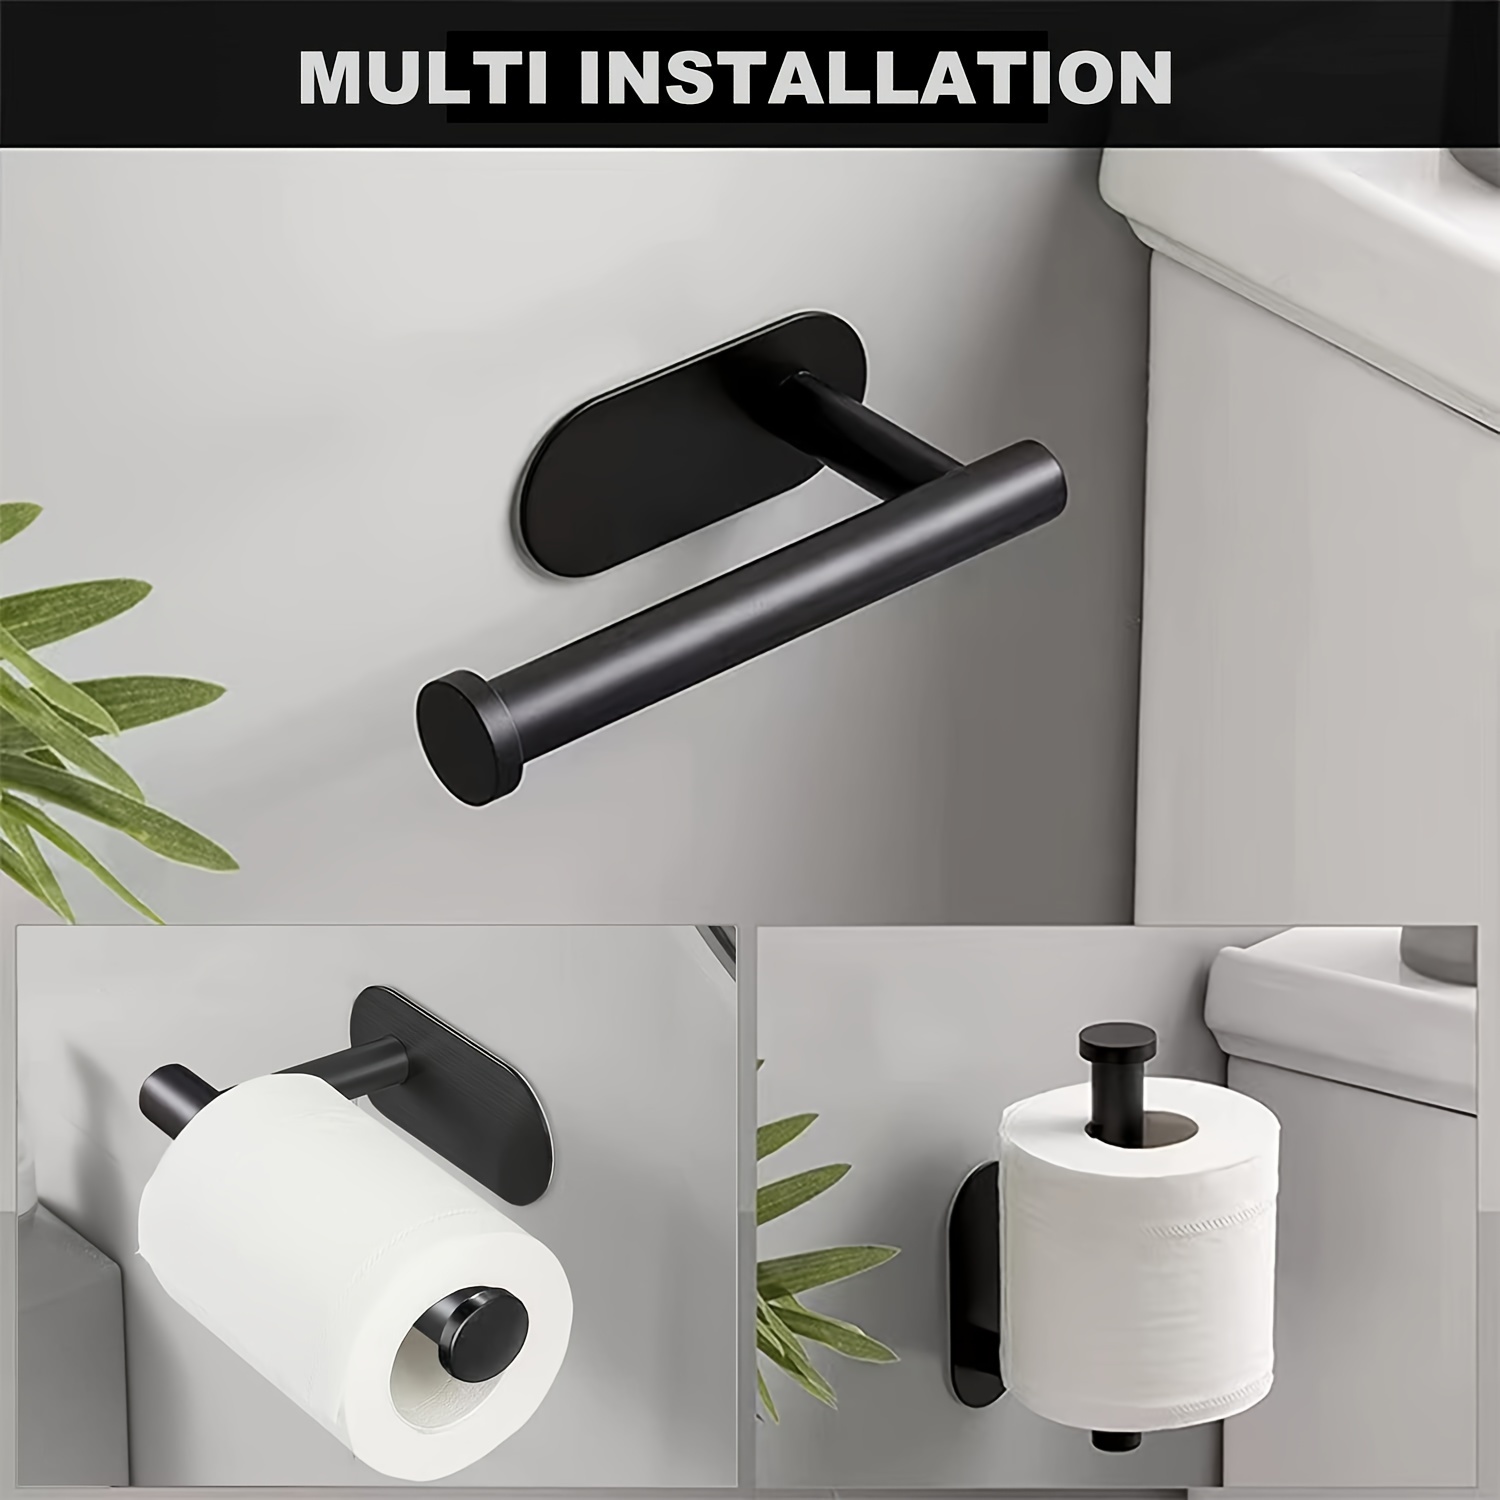  Matte Black Toilet Paper Holder - SUS304 Stainless Steel  Rustproof Wall Mounted Toilet Roll Holder for Bathroom, Kitchen (Matte Black)  : Tools & Home Improvement